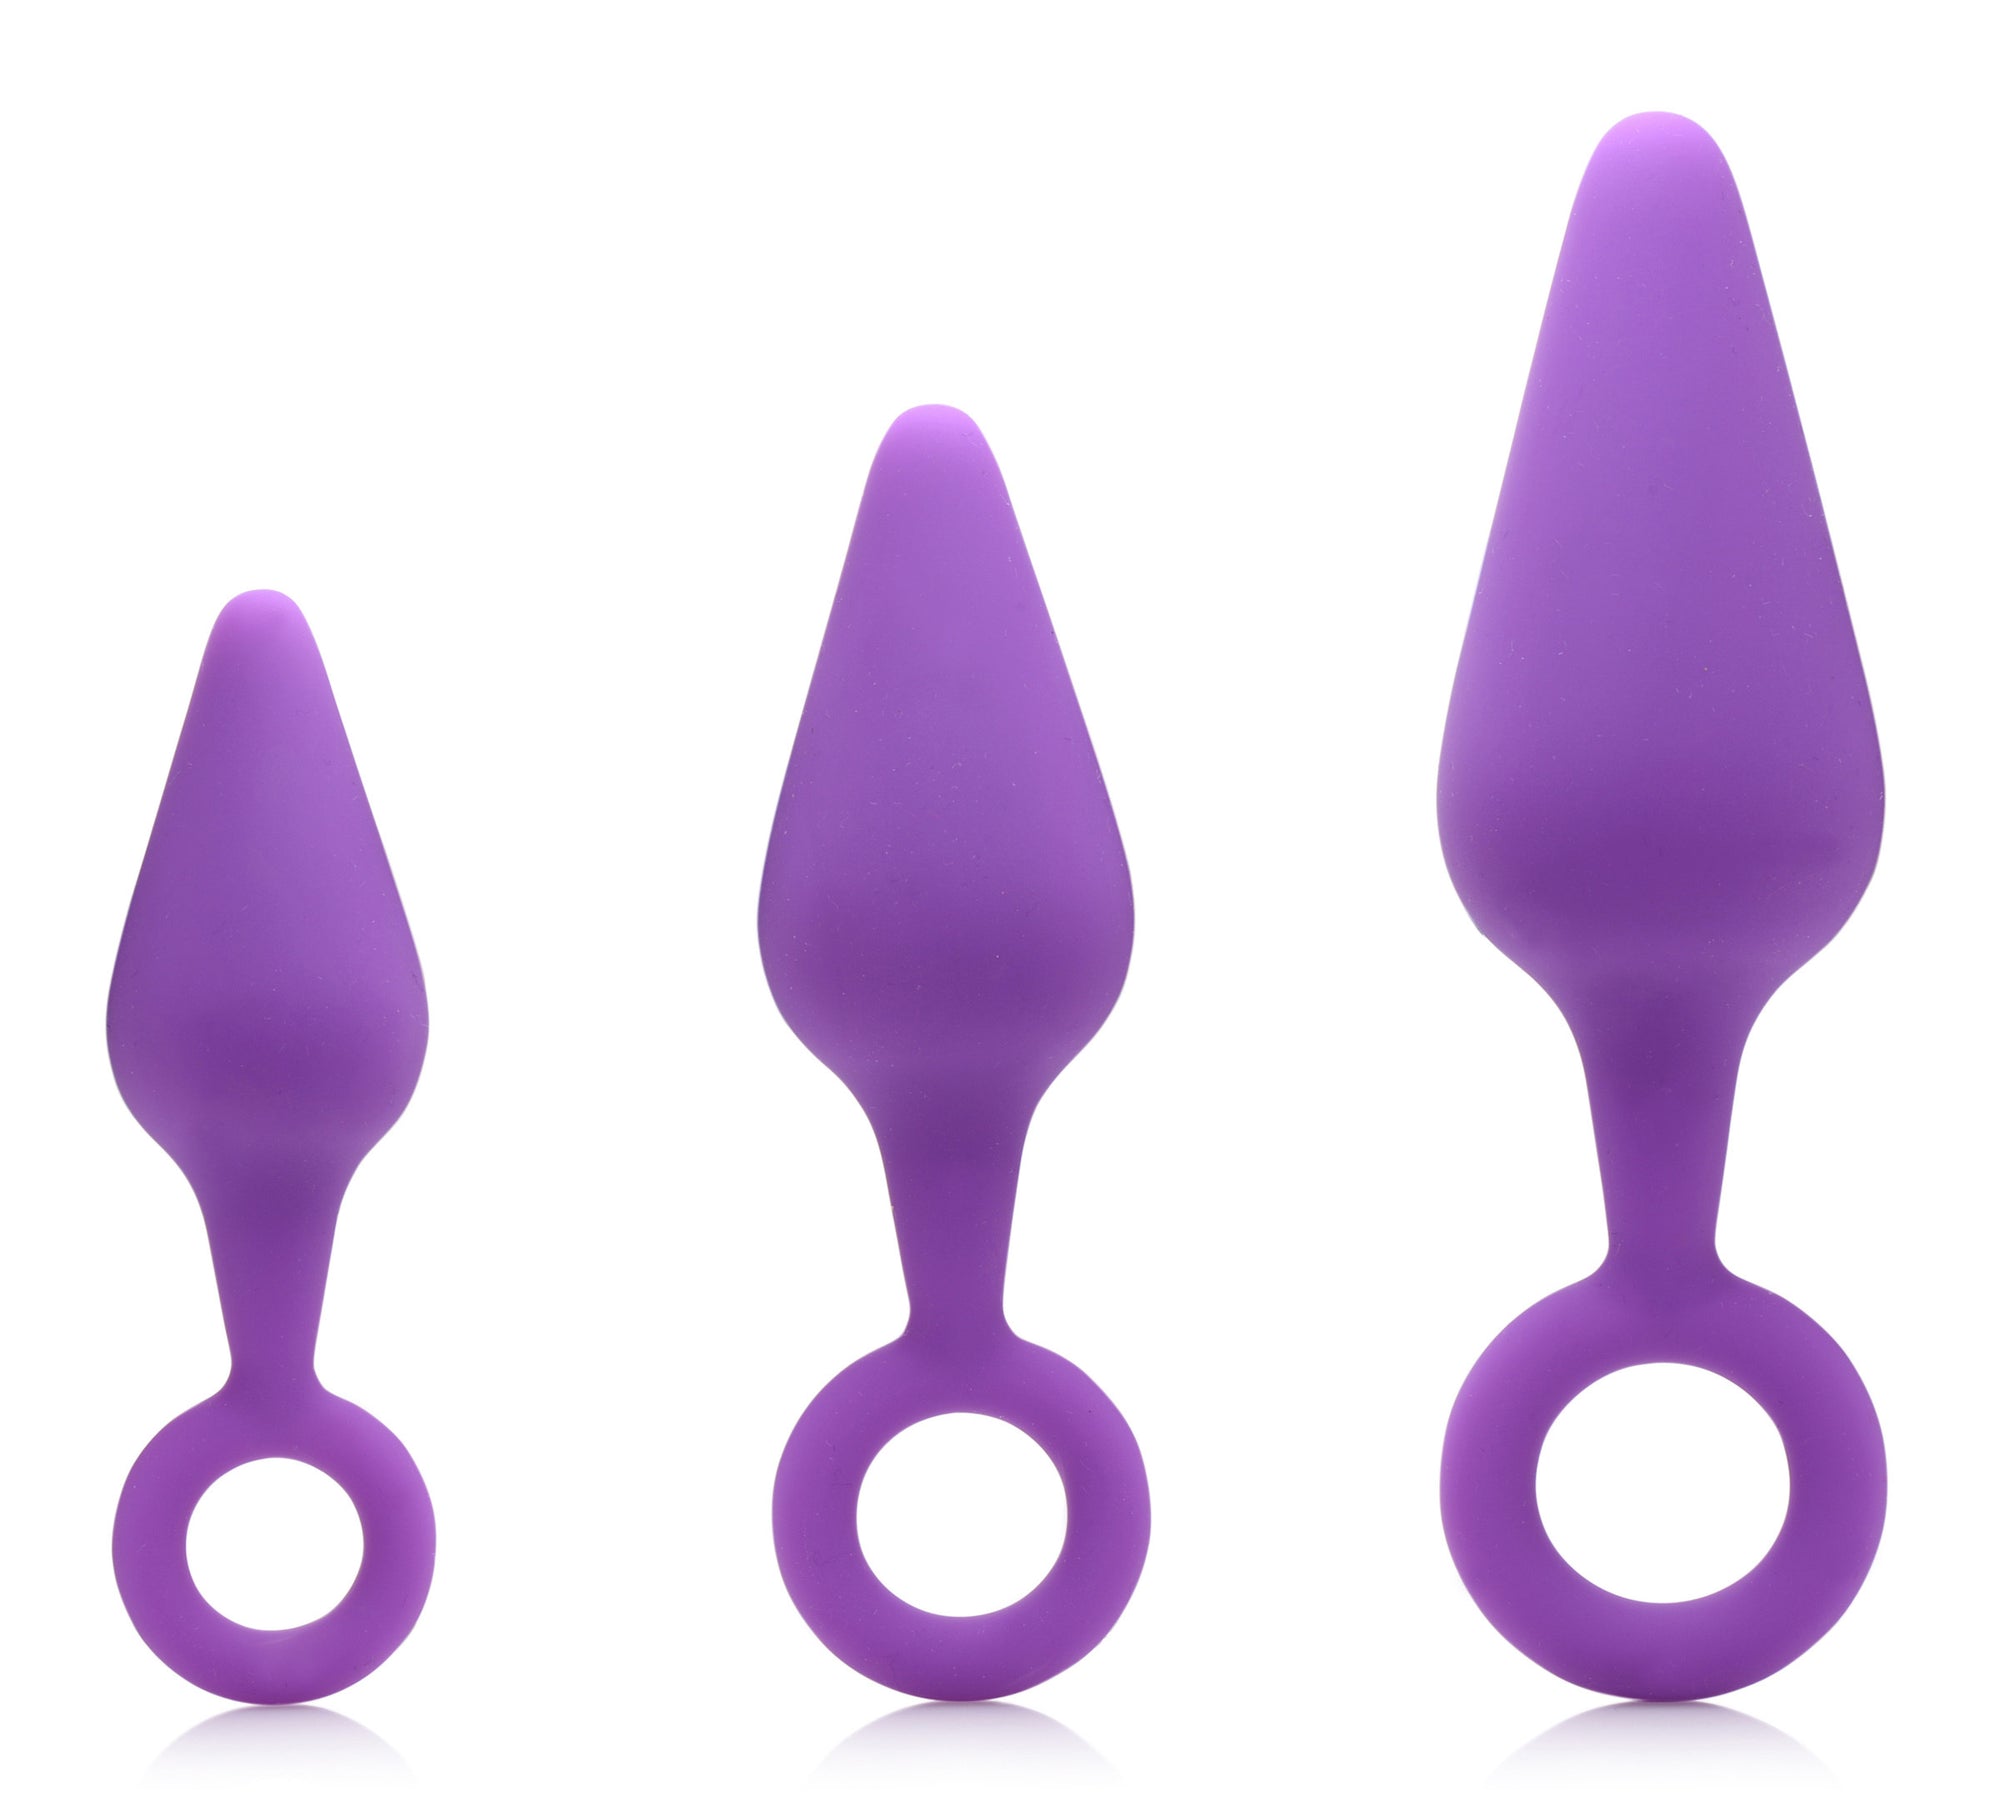 Rump Ringers 3 Piece Silicone Anal Plug Set - Purple 
Anal Toys
Gossip Cupid’s Secret Stash